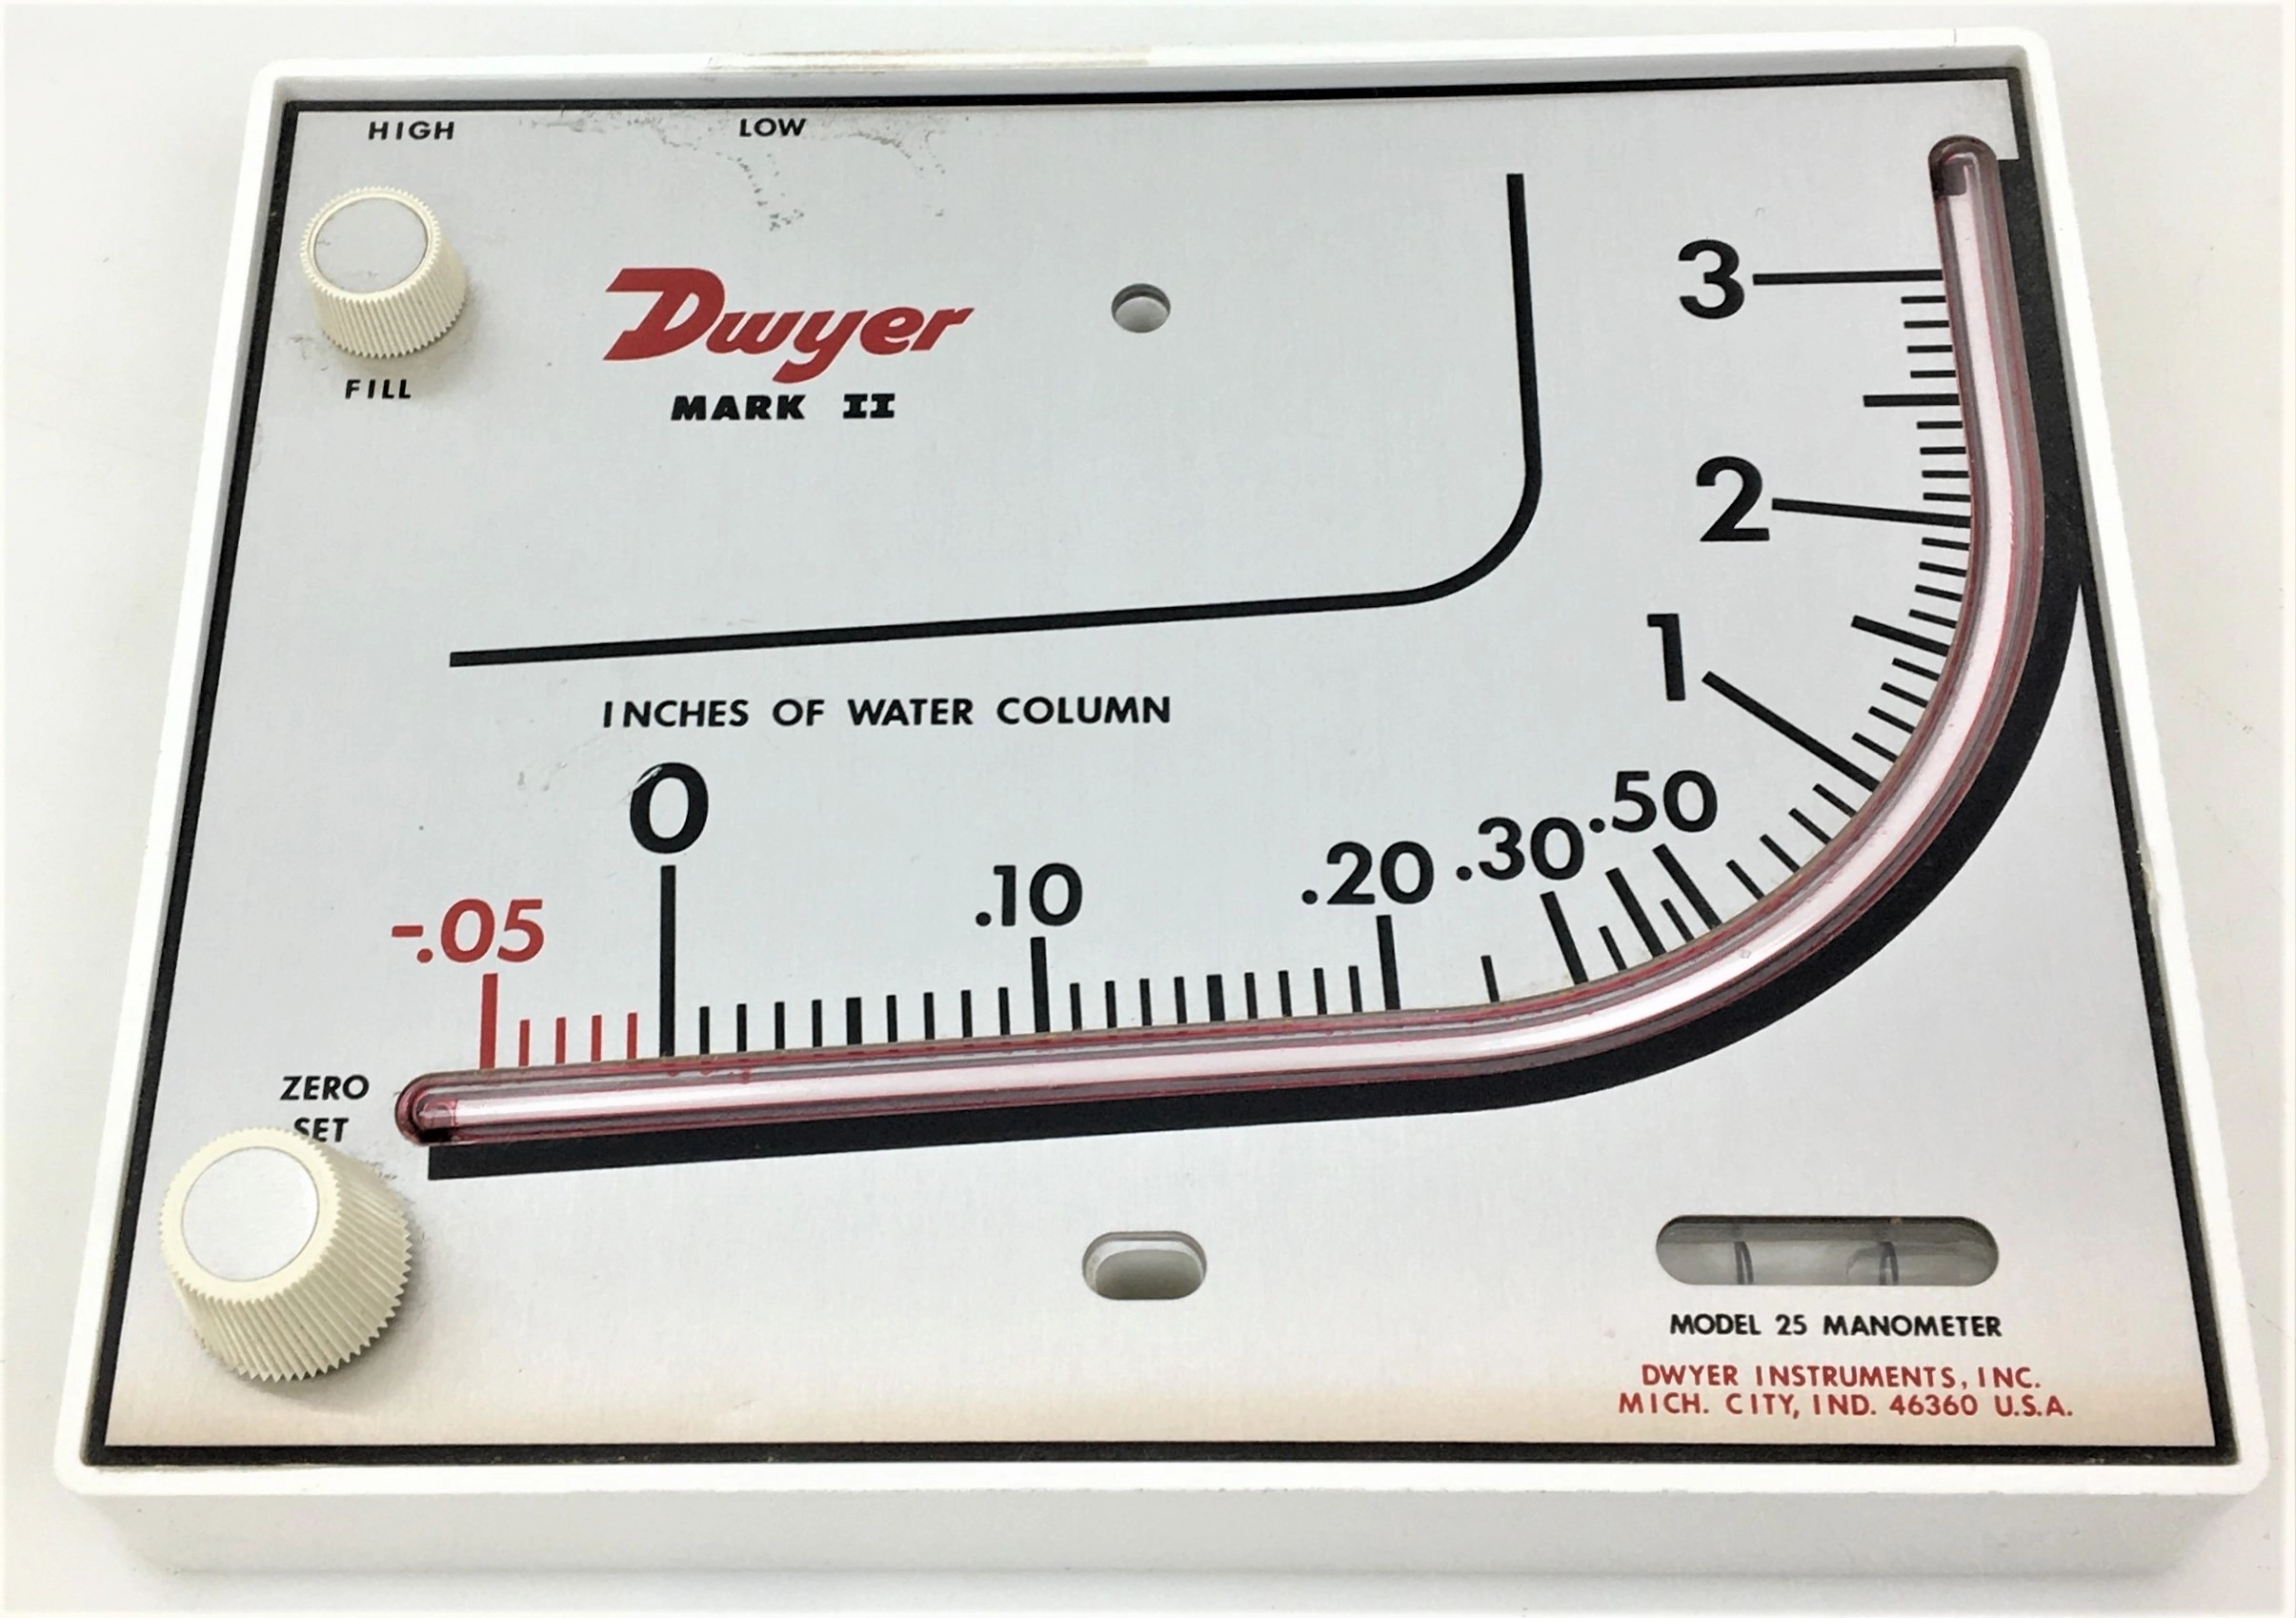 Dwyer Mark II Model 25 Manometer - Range of 0-3.0" W.C.